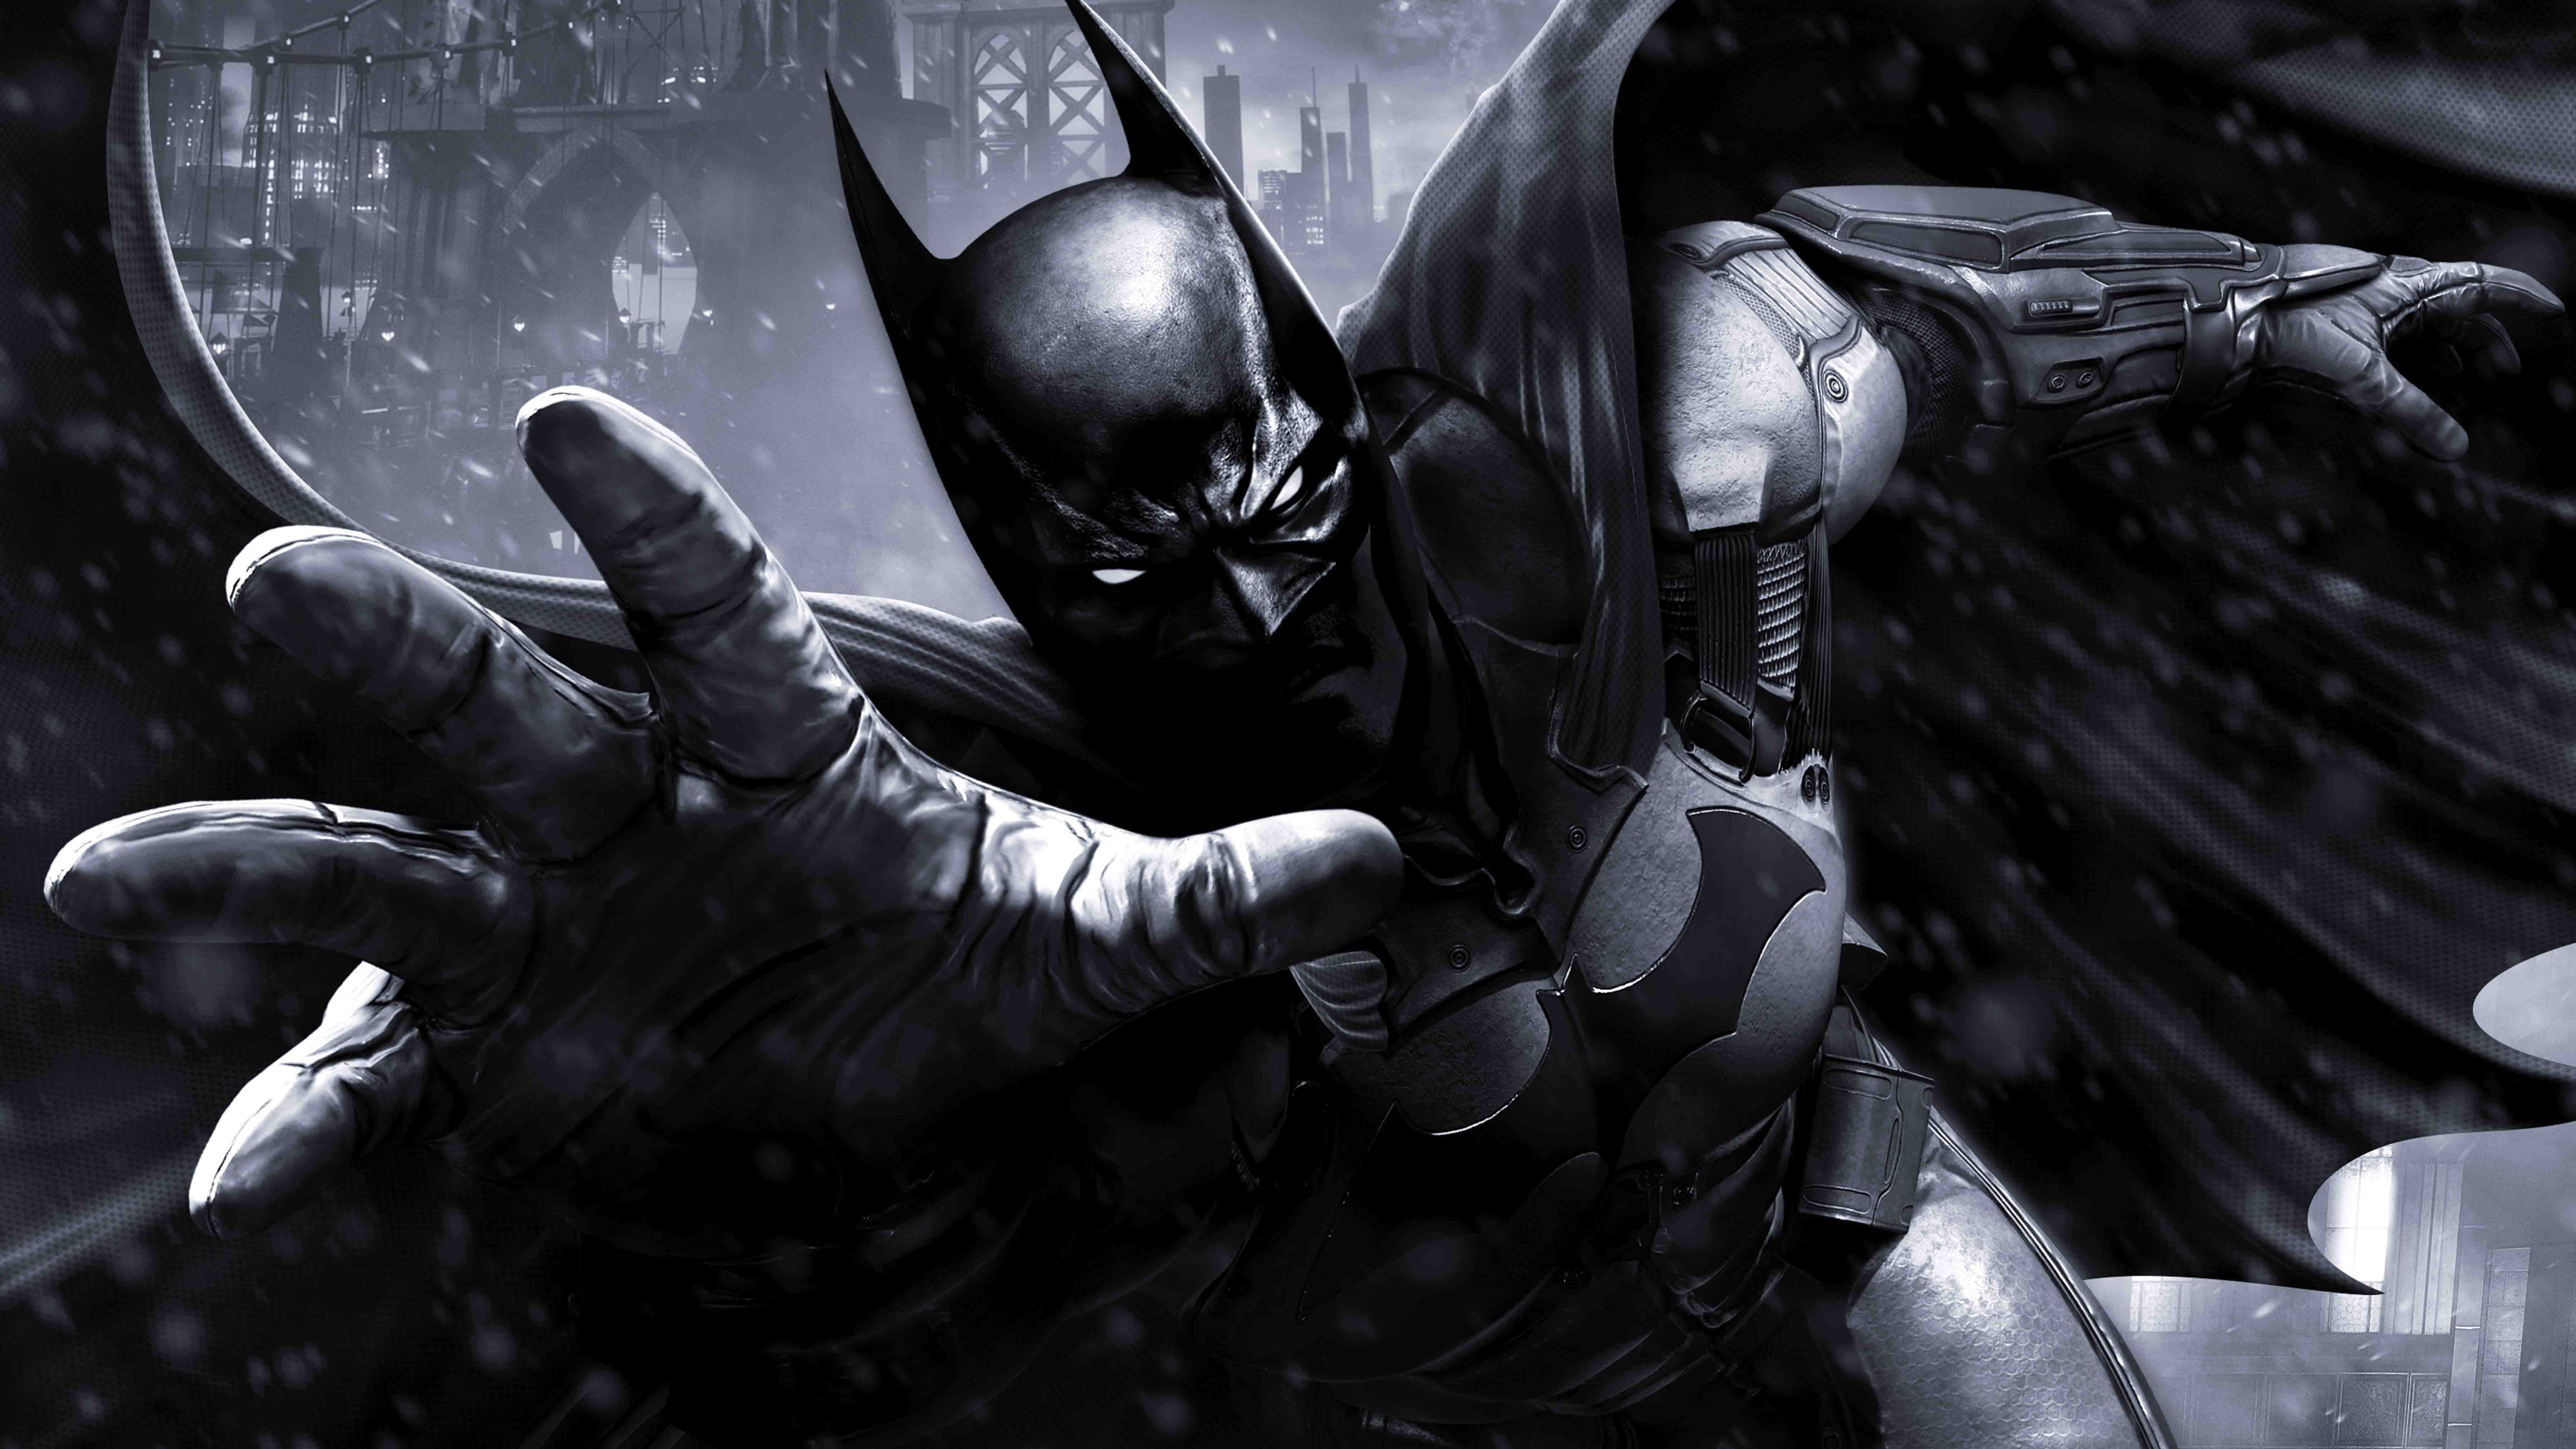 Wallpaper Batman, Arkham Origins, 4K, 8K, Games,. Wallpaper for iPhone, Android, Mobile and Desktop